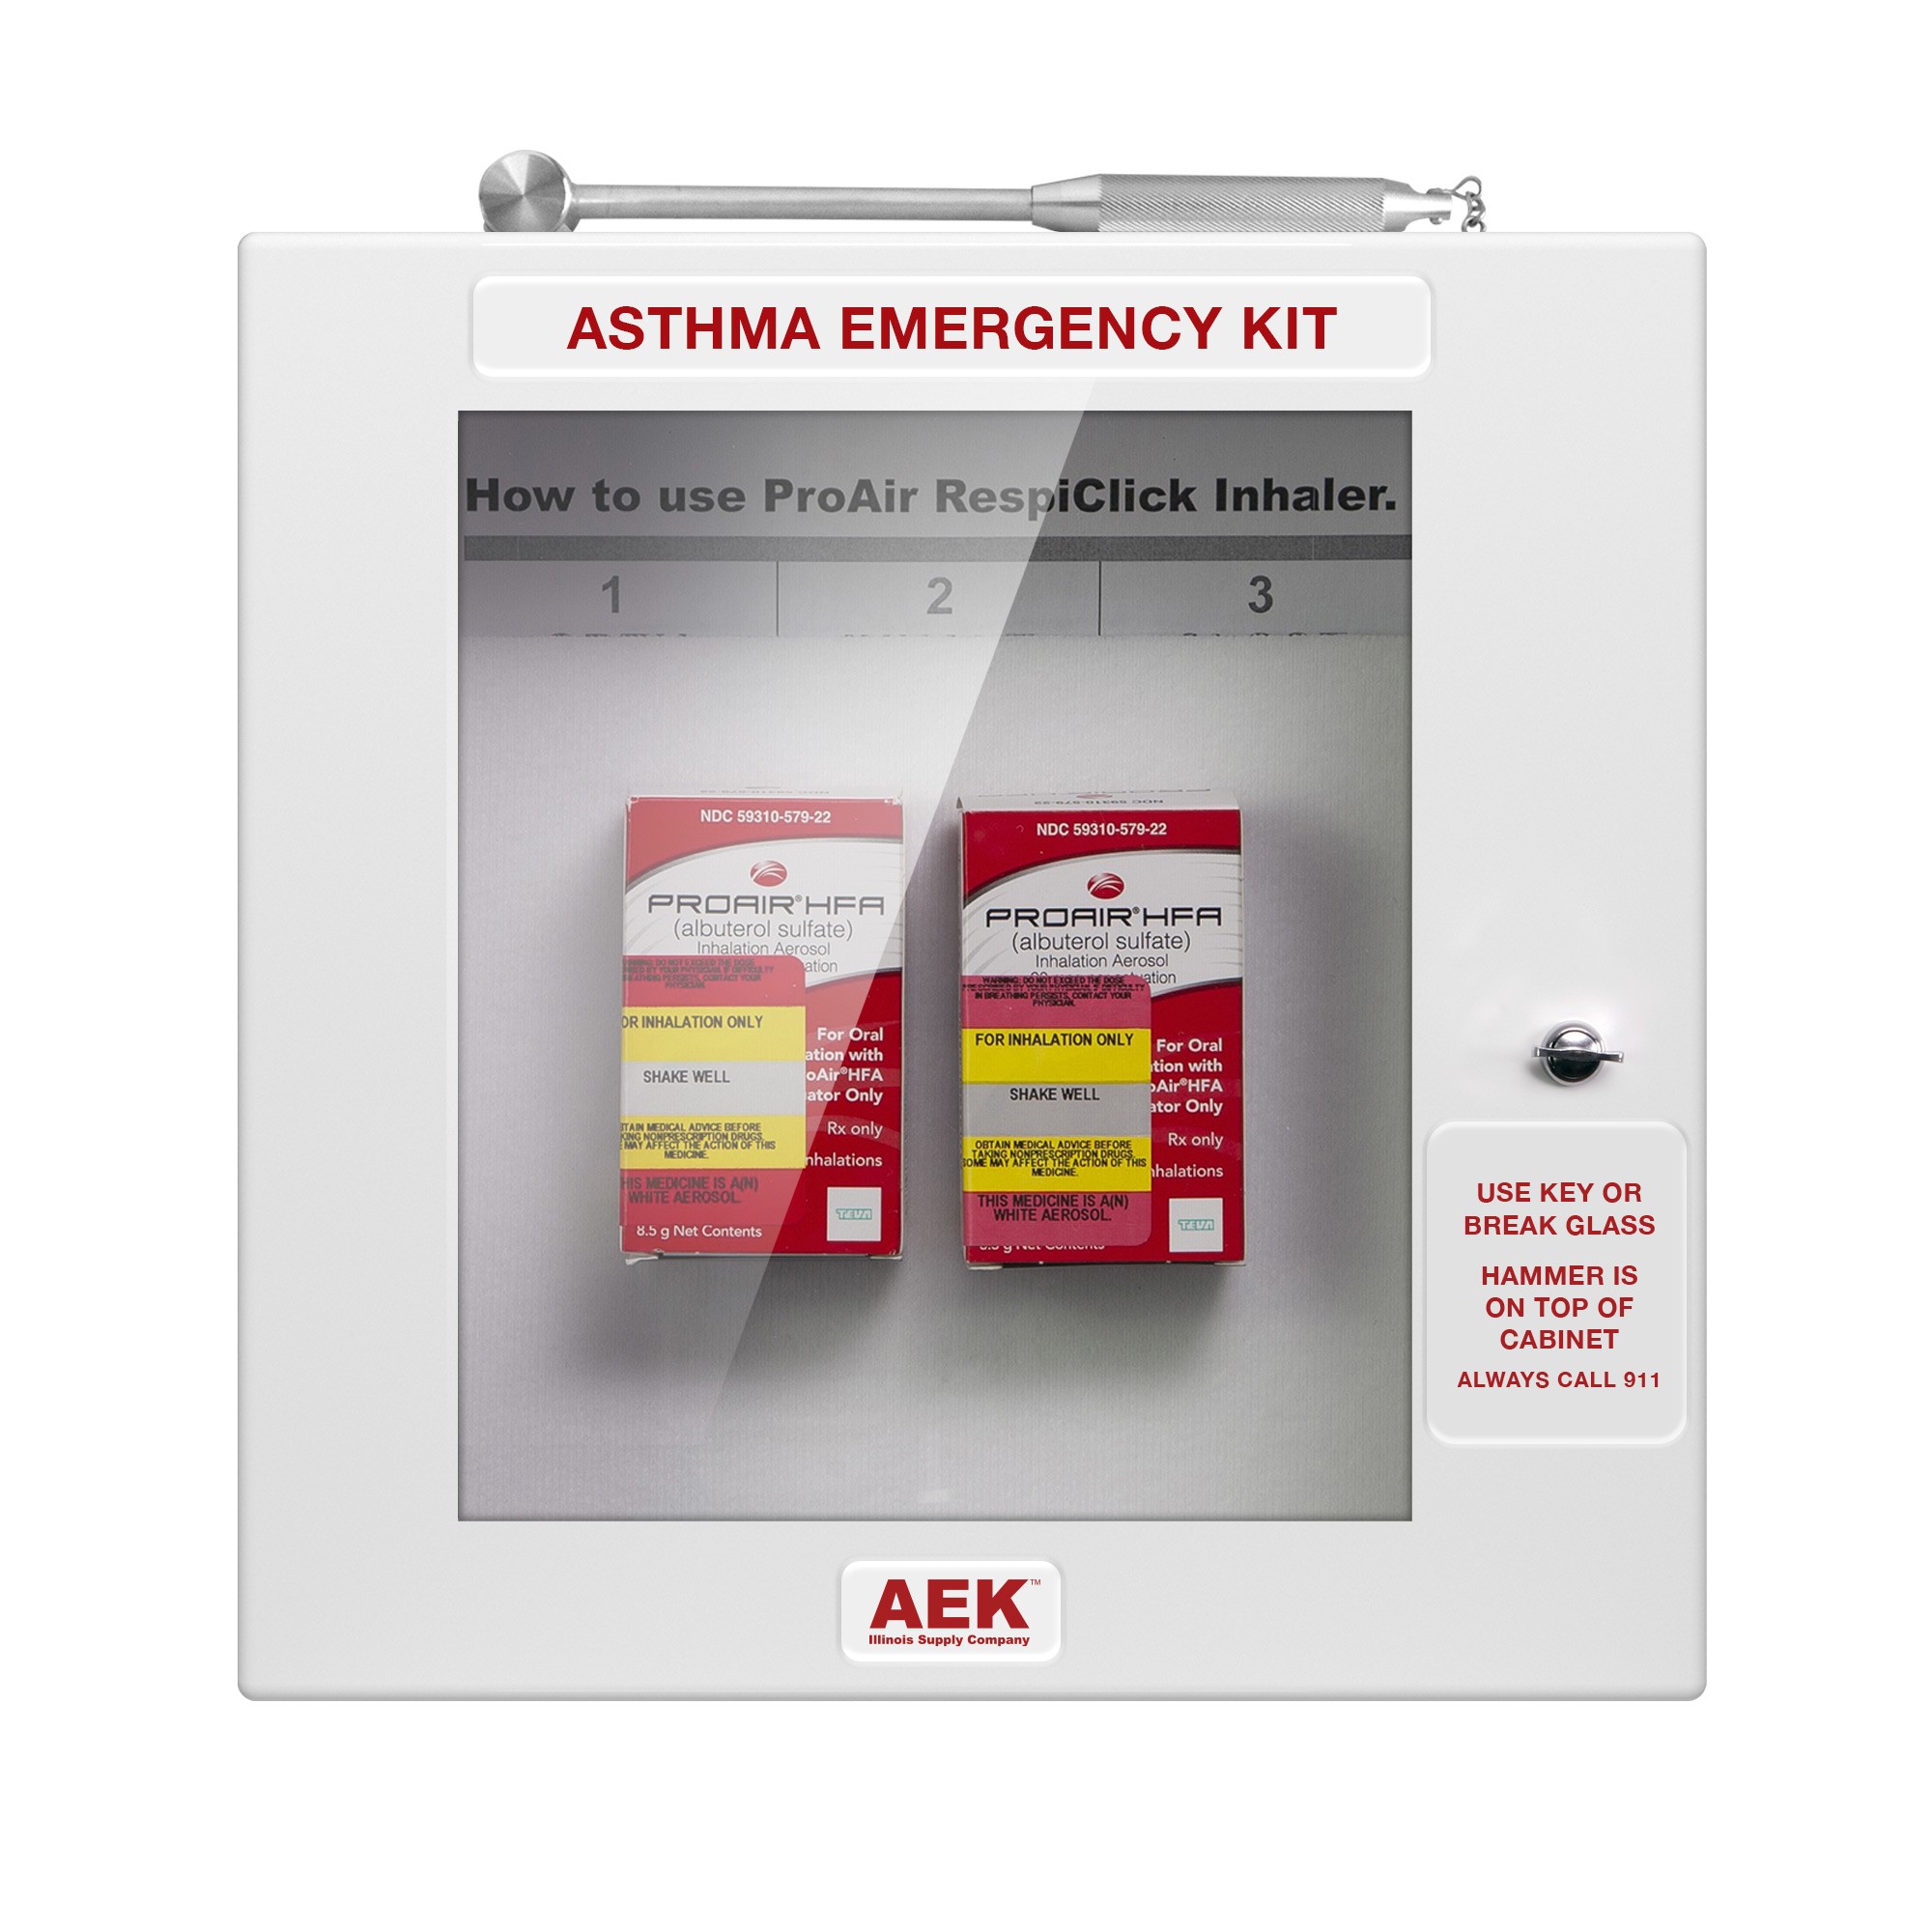 Asthma Emergency Kit - Albuterol